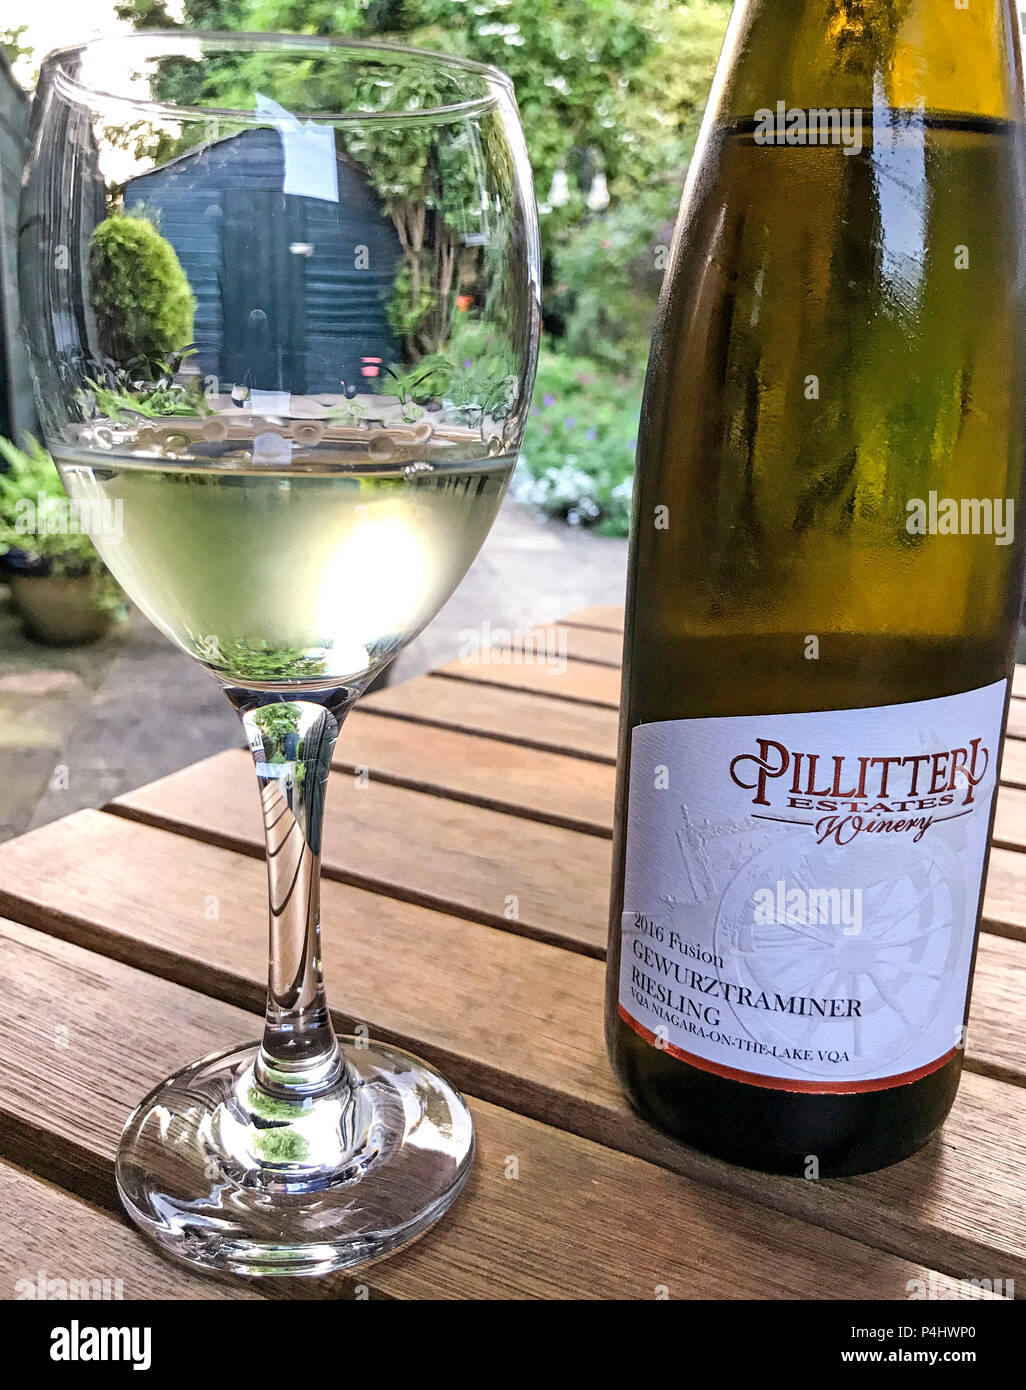 Canadian Pillitteri Estates Winery 2016, Fusion Gewurztraminer Riesling vqa niagara-on-the-lake white wine, bottle and glass Stock Photo